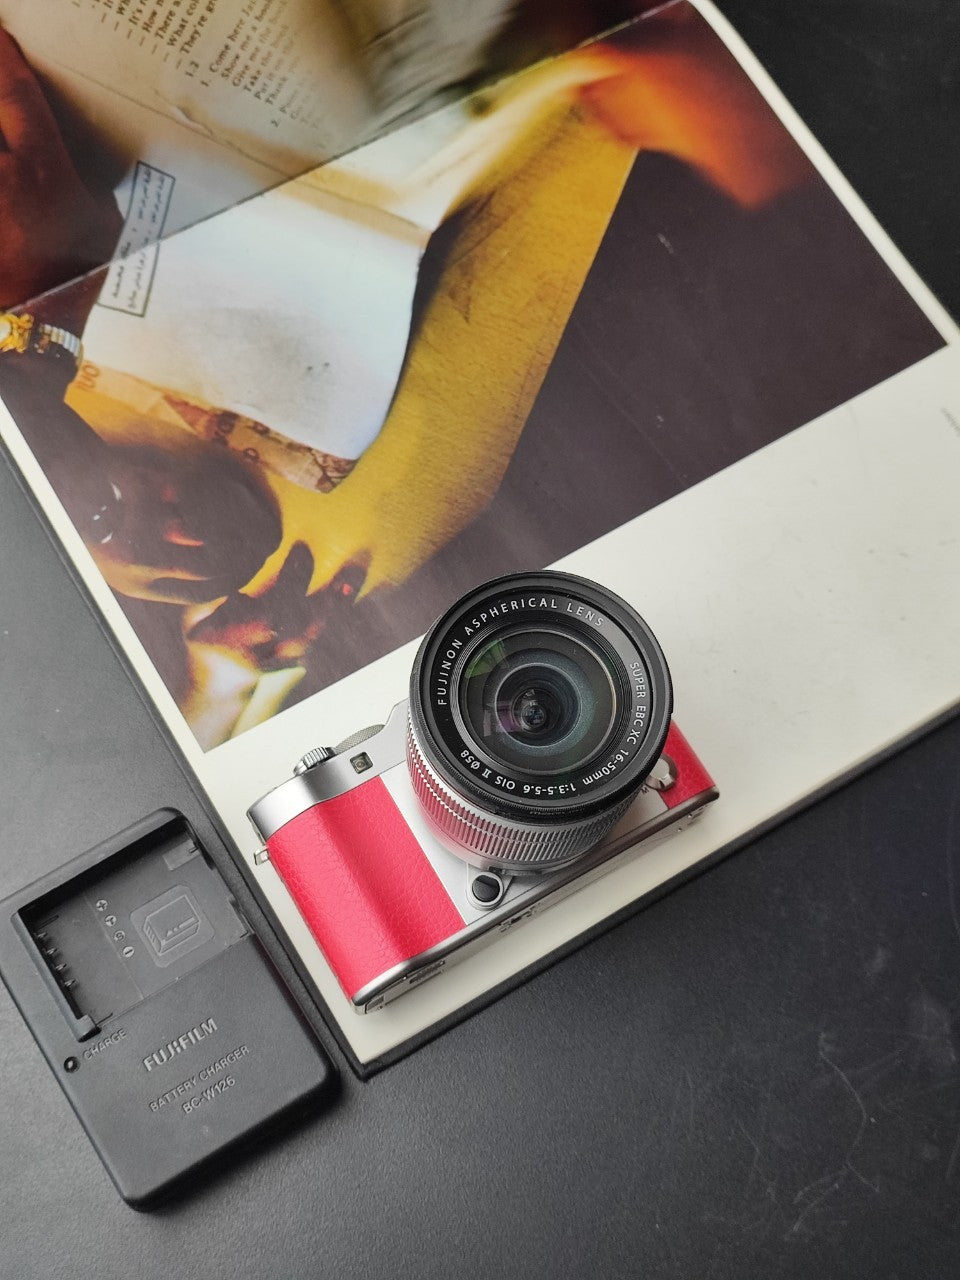 Fujifilm X-A3 Digital Camera with lens